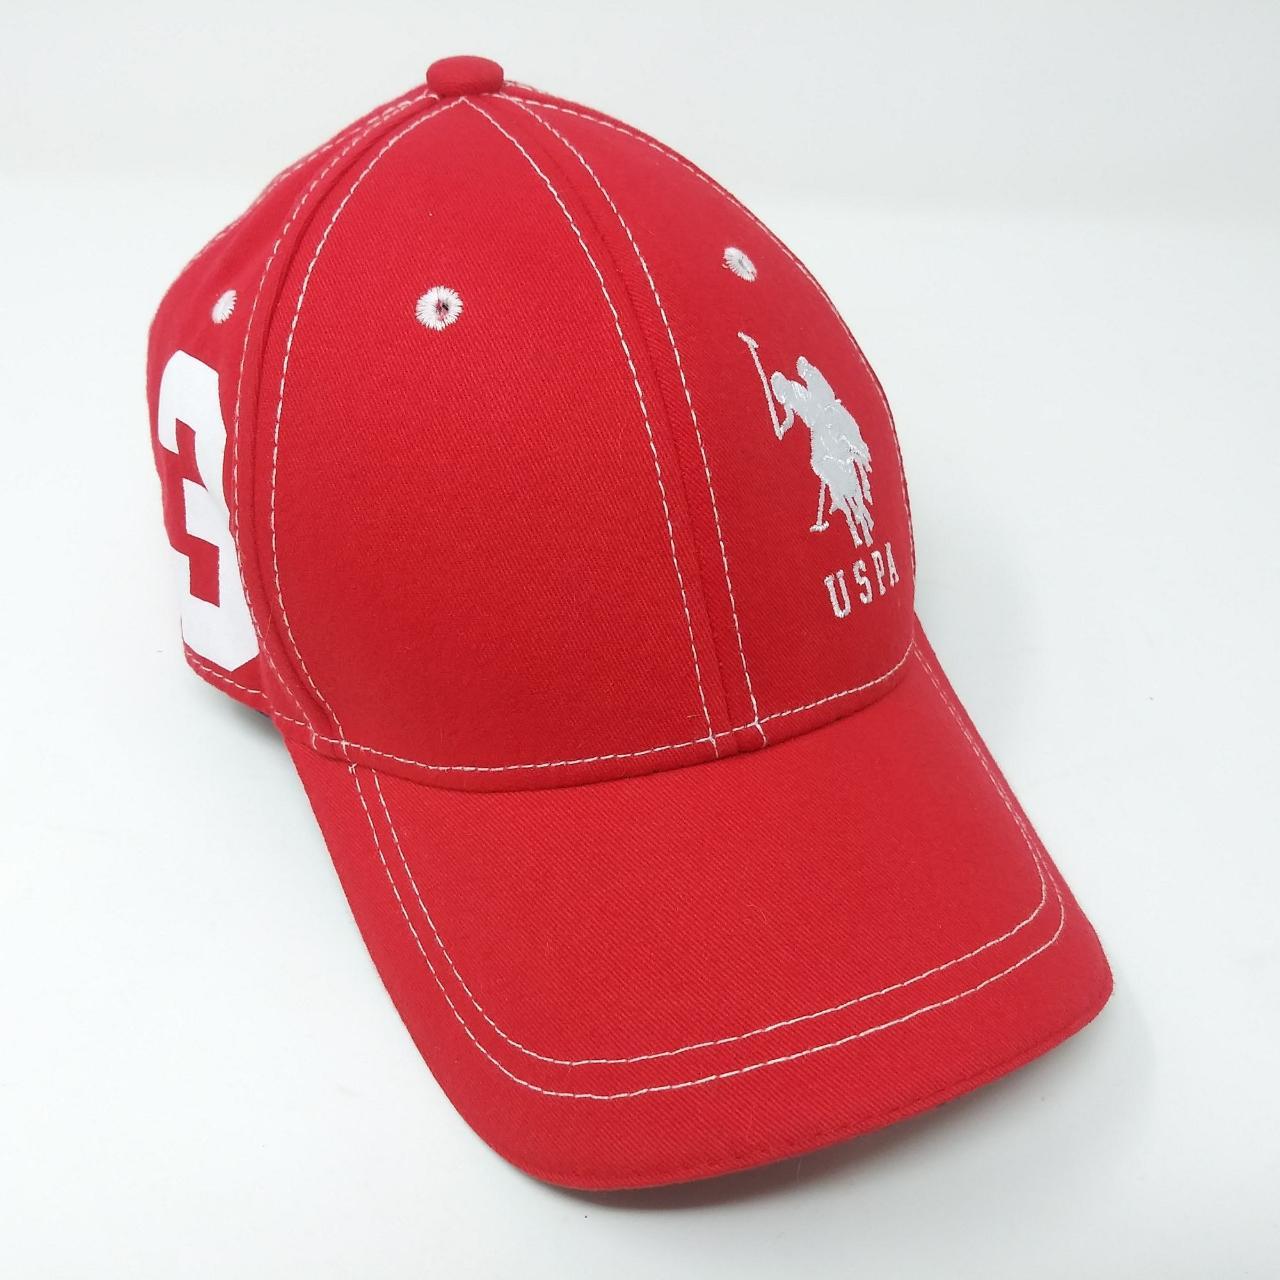 U.S. Polo Assn. Men's Red Hat